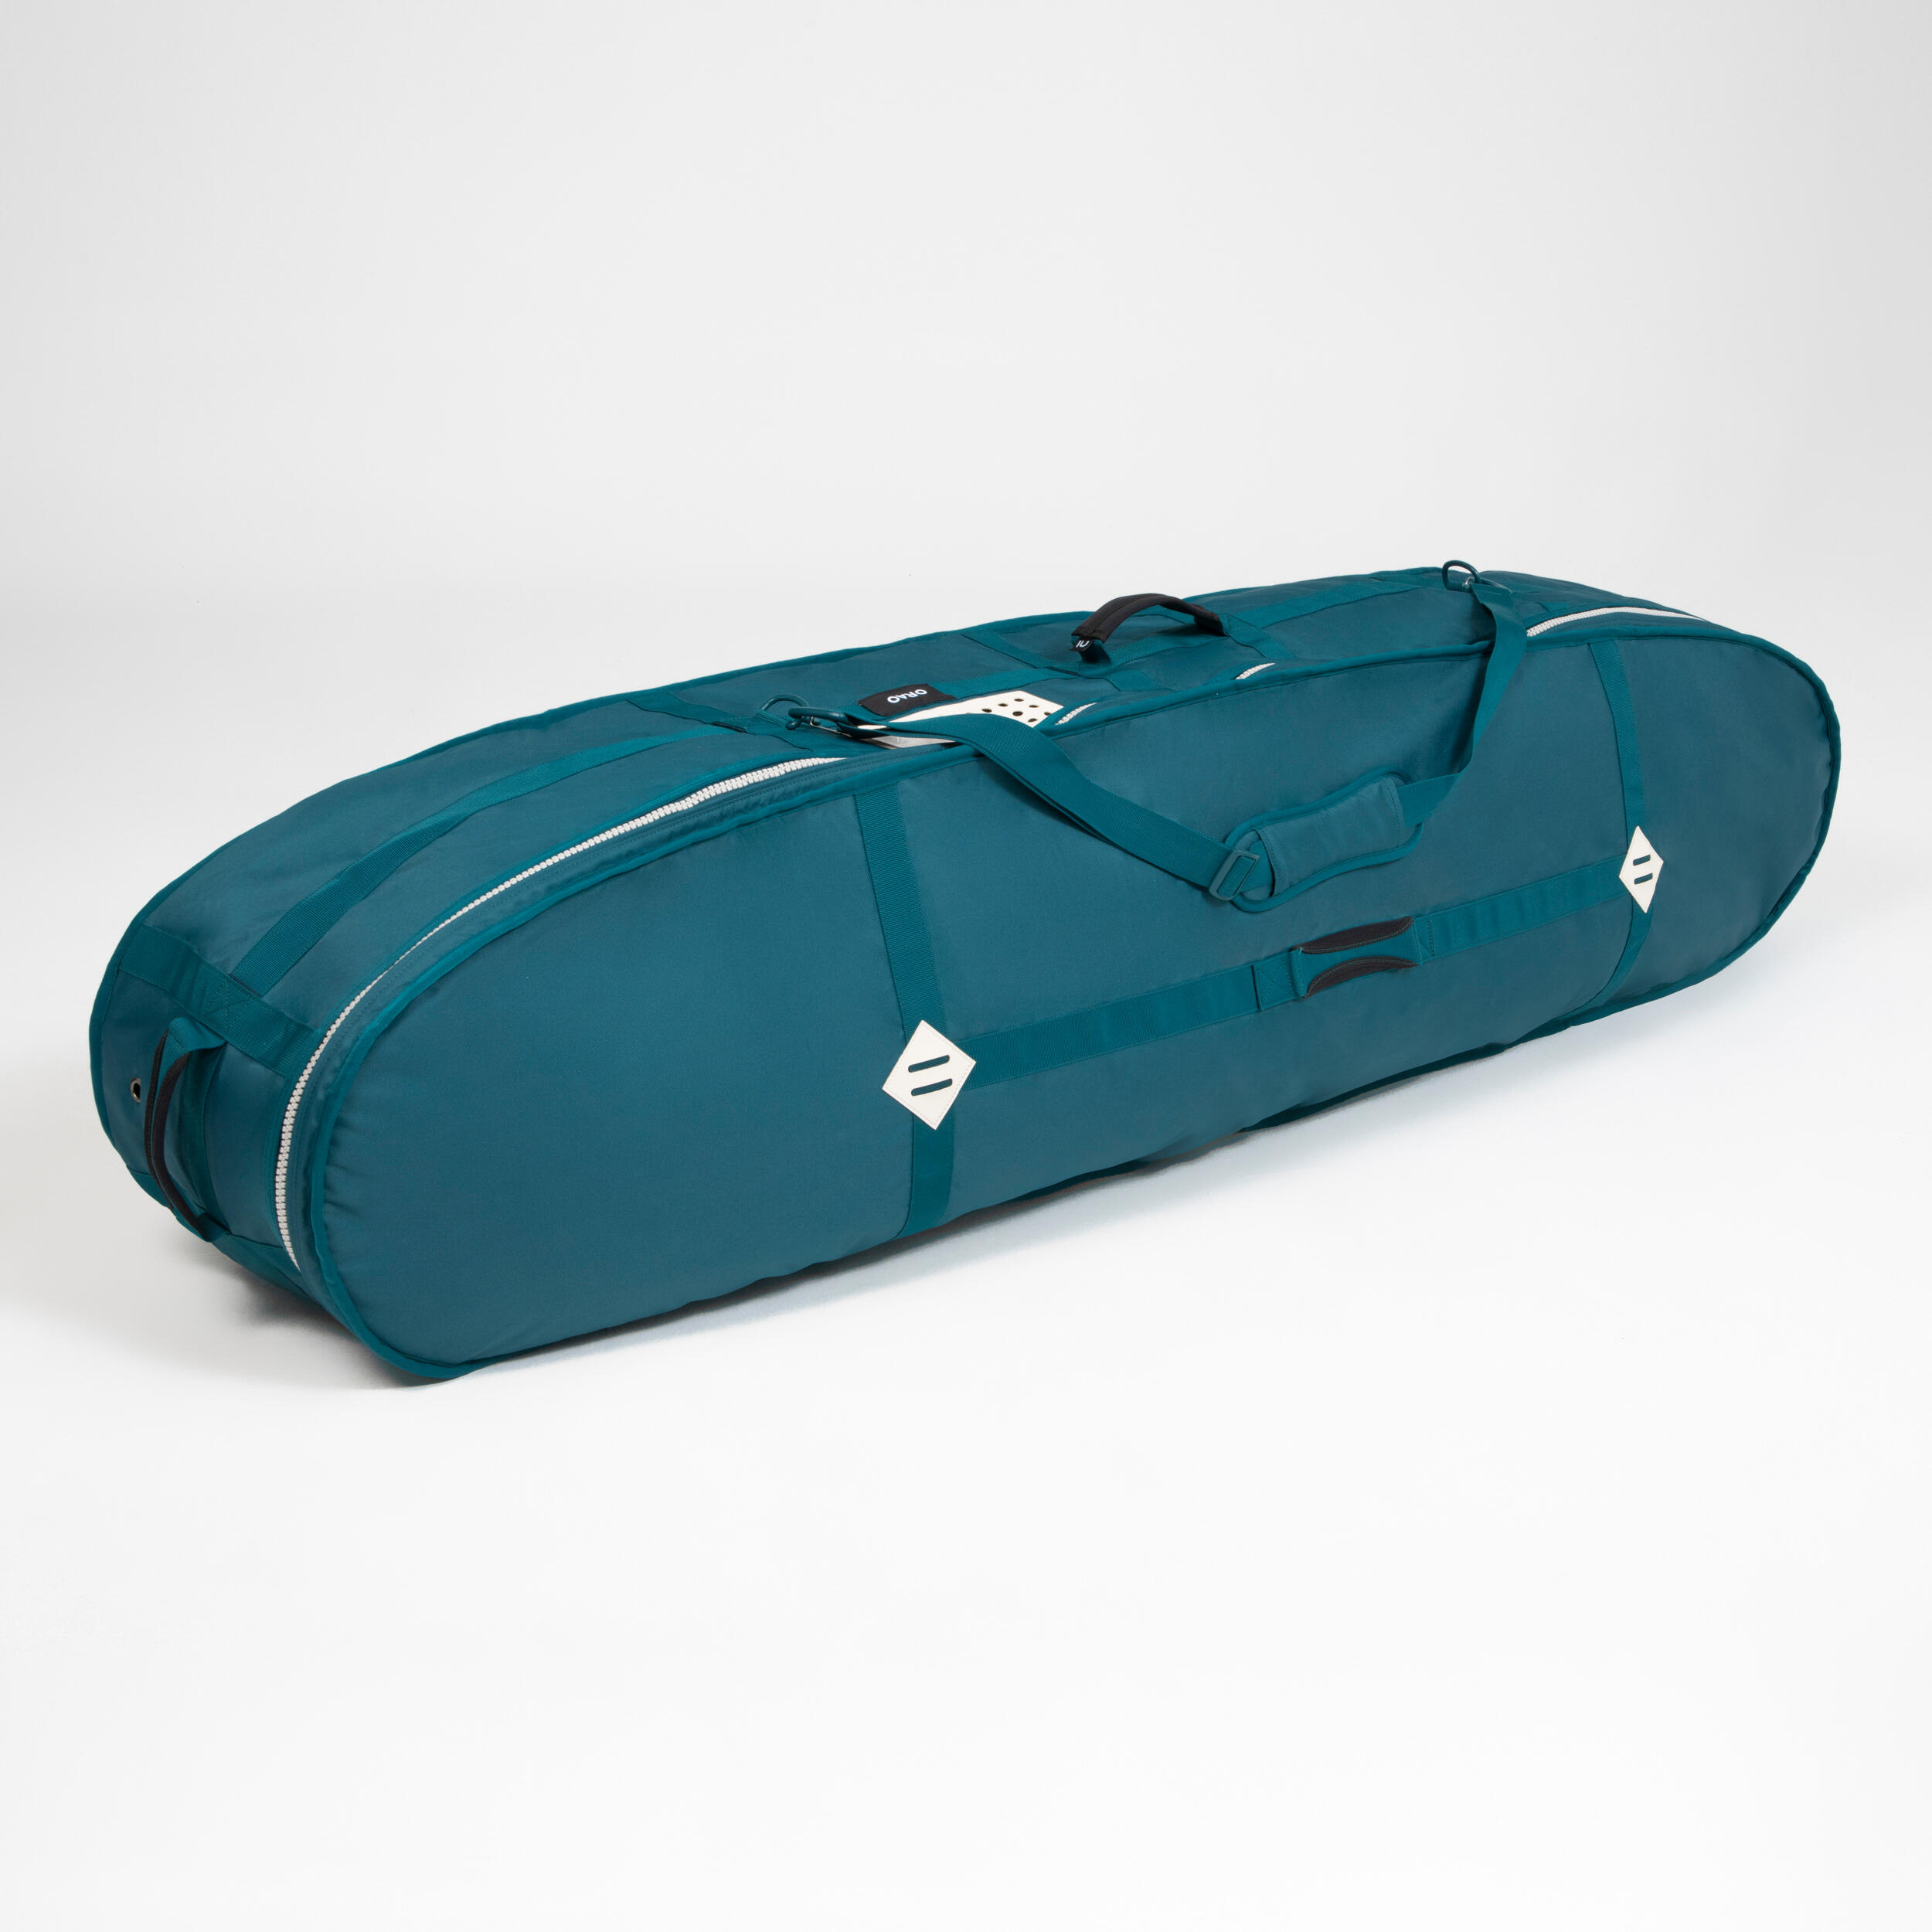 ORAO Boardbag Kitesurfen oder Wingfoilen max. 6' EINHEITSGRÖSSE